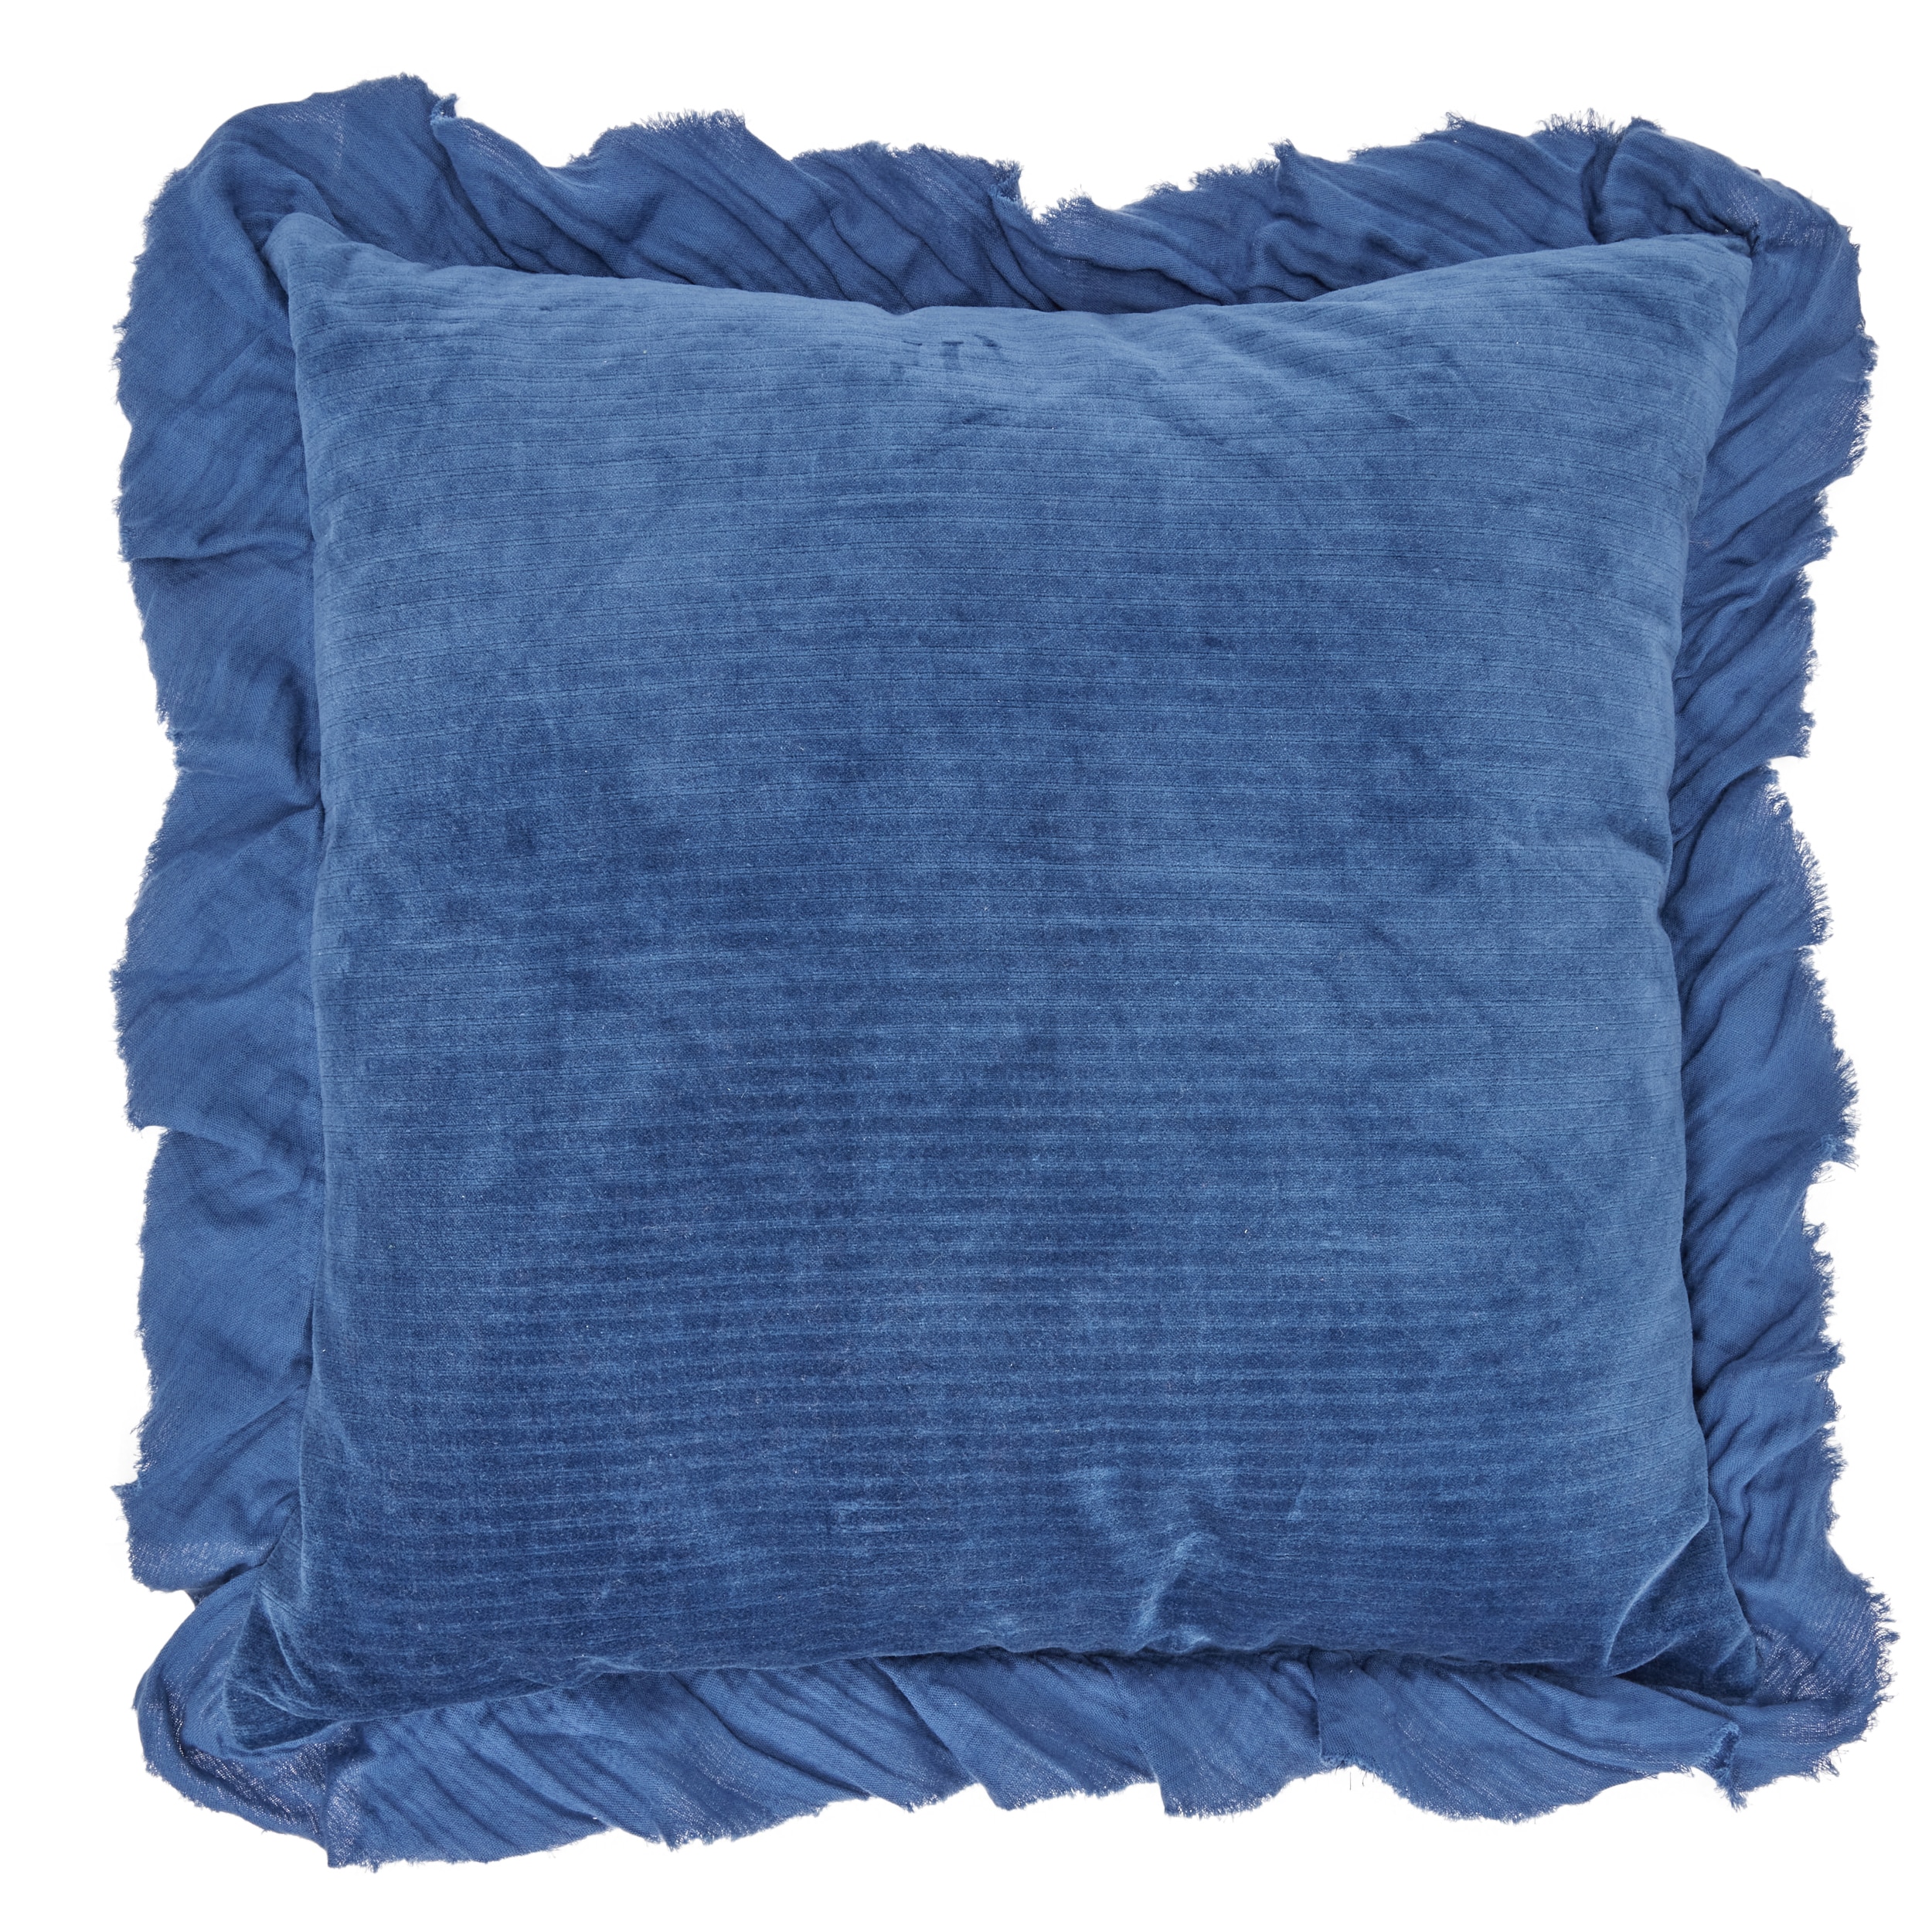 Dia Noche BLK-SueBrownKeyRingsBlack3 Fleece Throw Blankets 4 Sizes Large 80 x 60 Brown